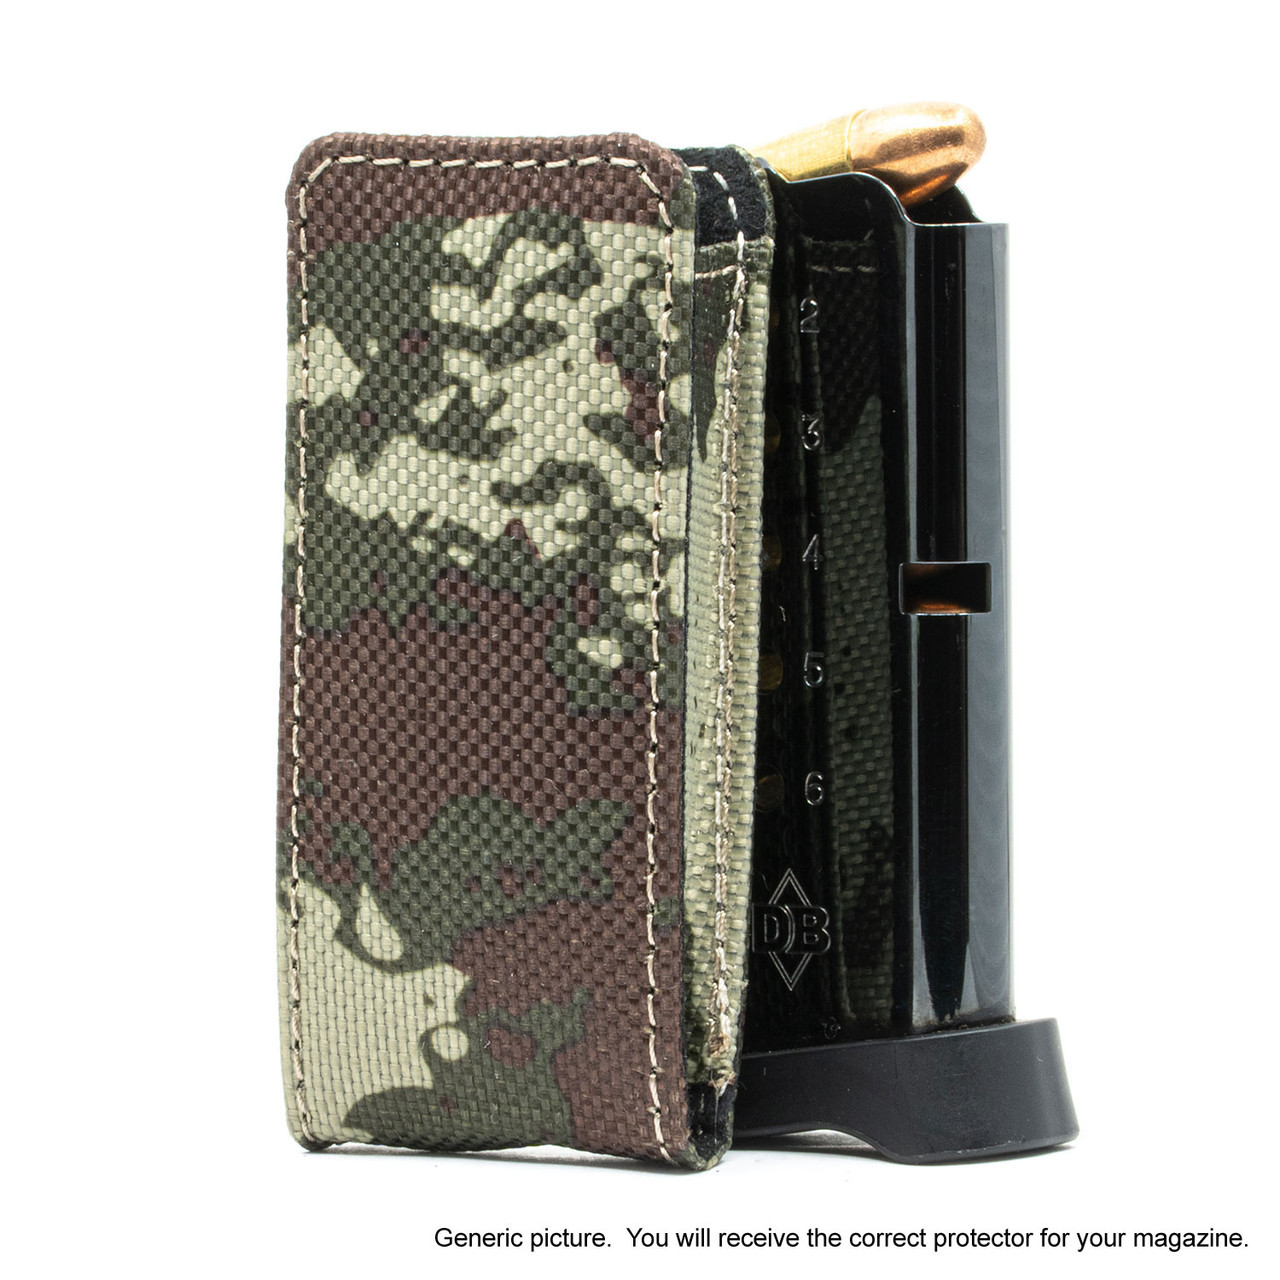 Diamondback DB380 Camouflage Nylon Magazine Pocket Protector